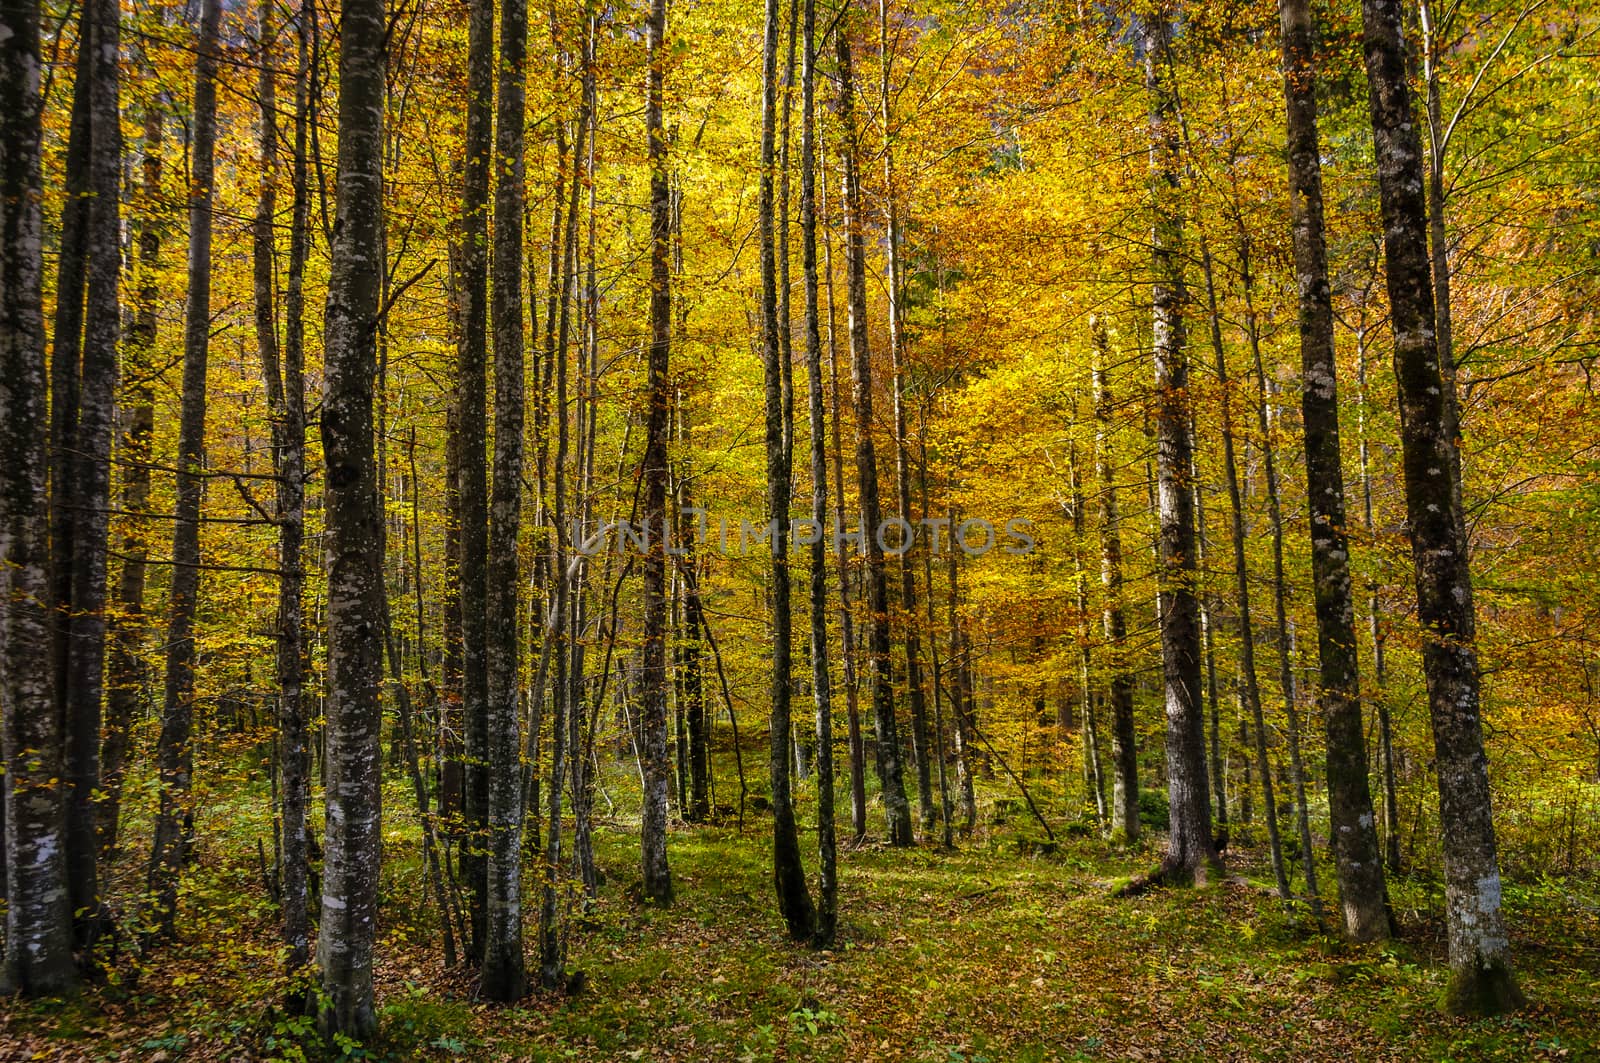 Birches in autumn by asafaric